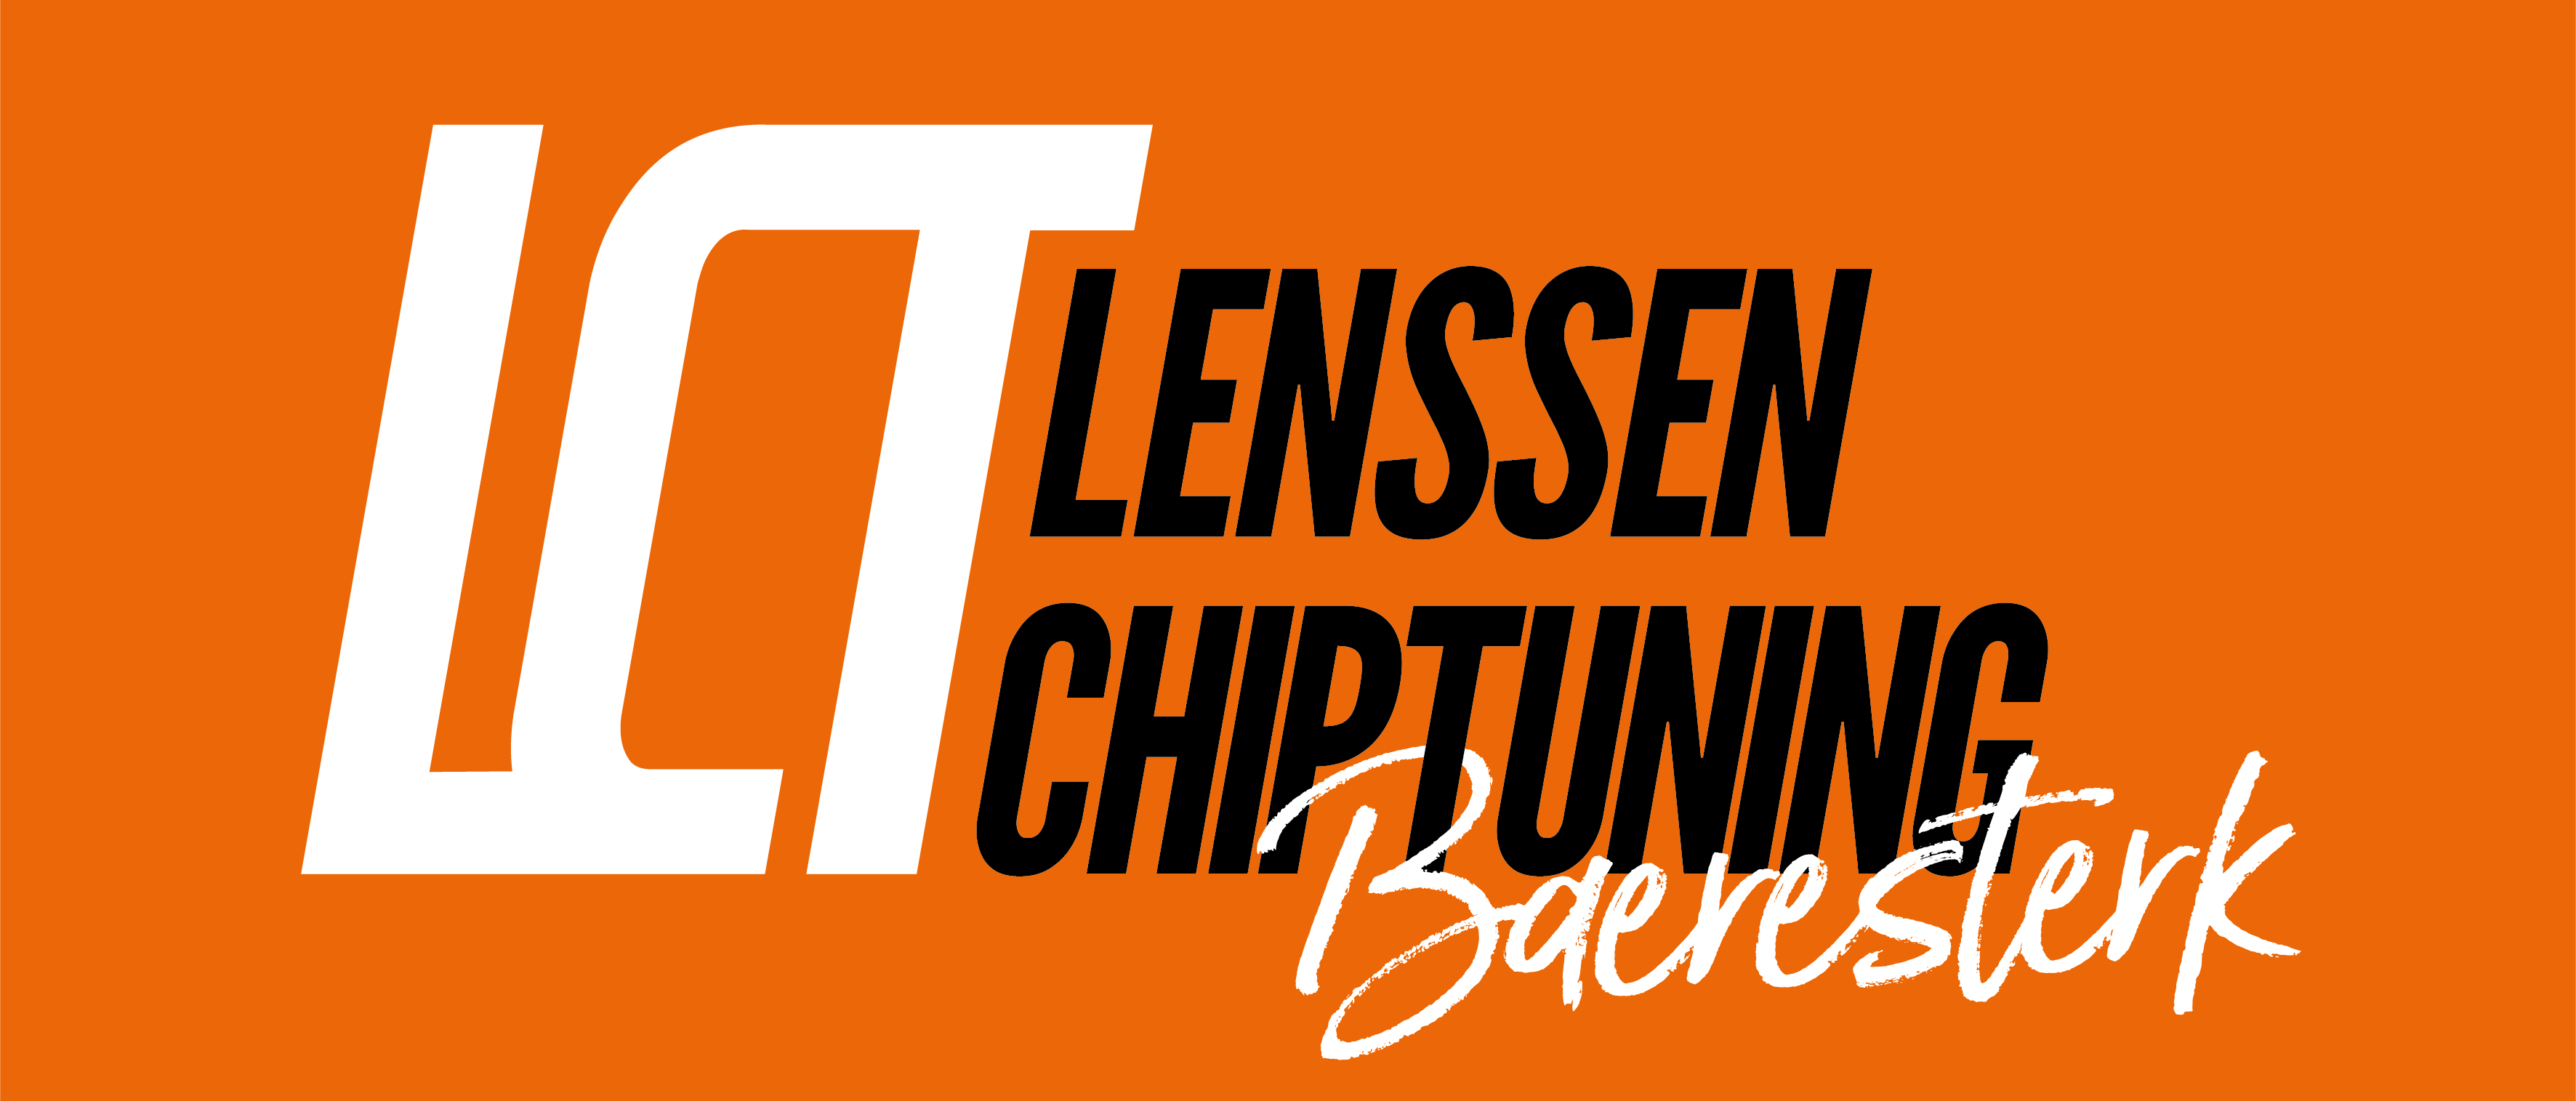 Lenssen Chiptuning